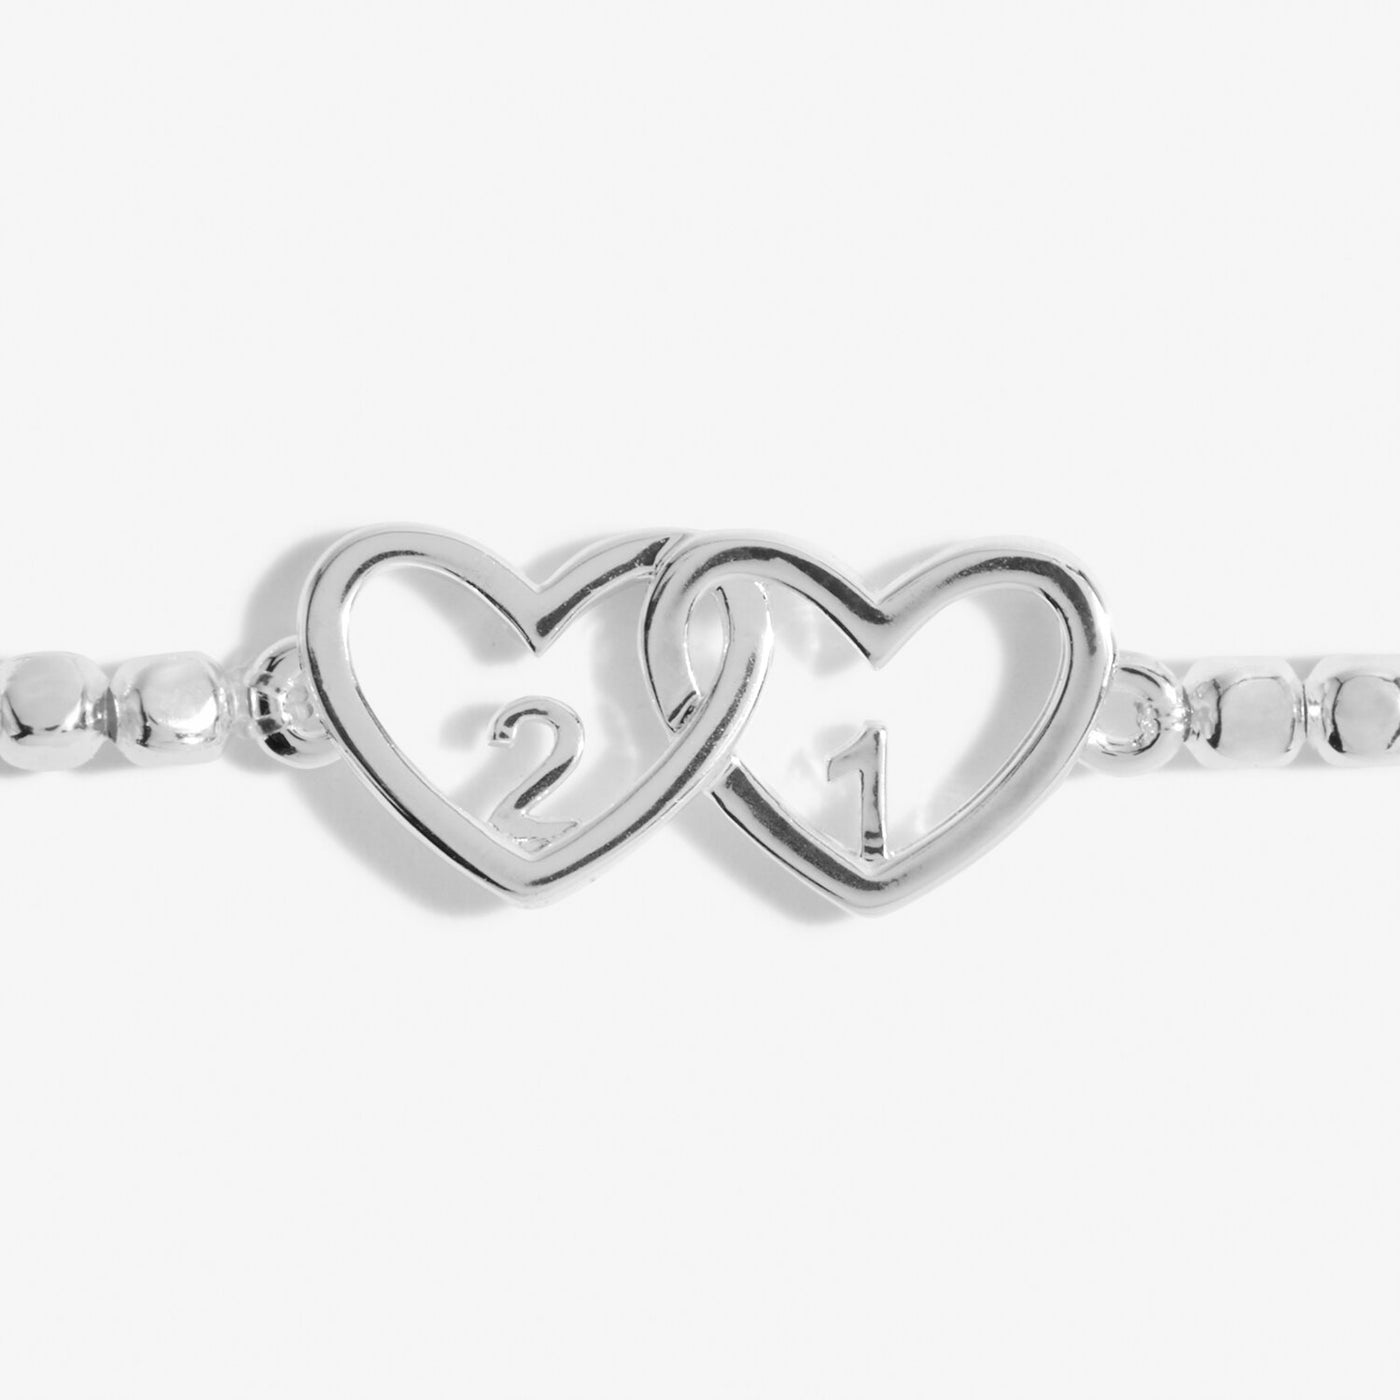 Joma Jewellery Forever Yours Bracelet - "Happy 21st Birthday' Bracelet